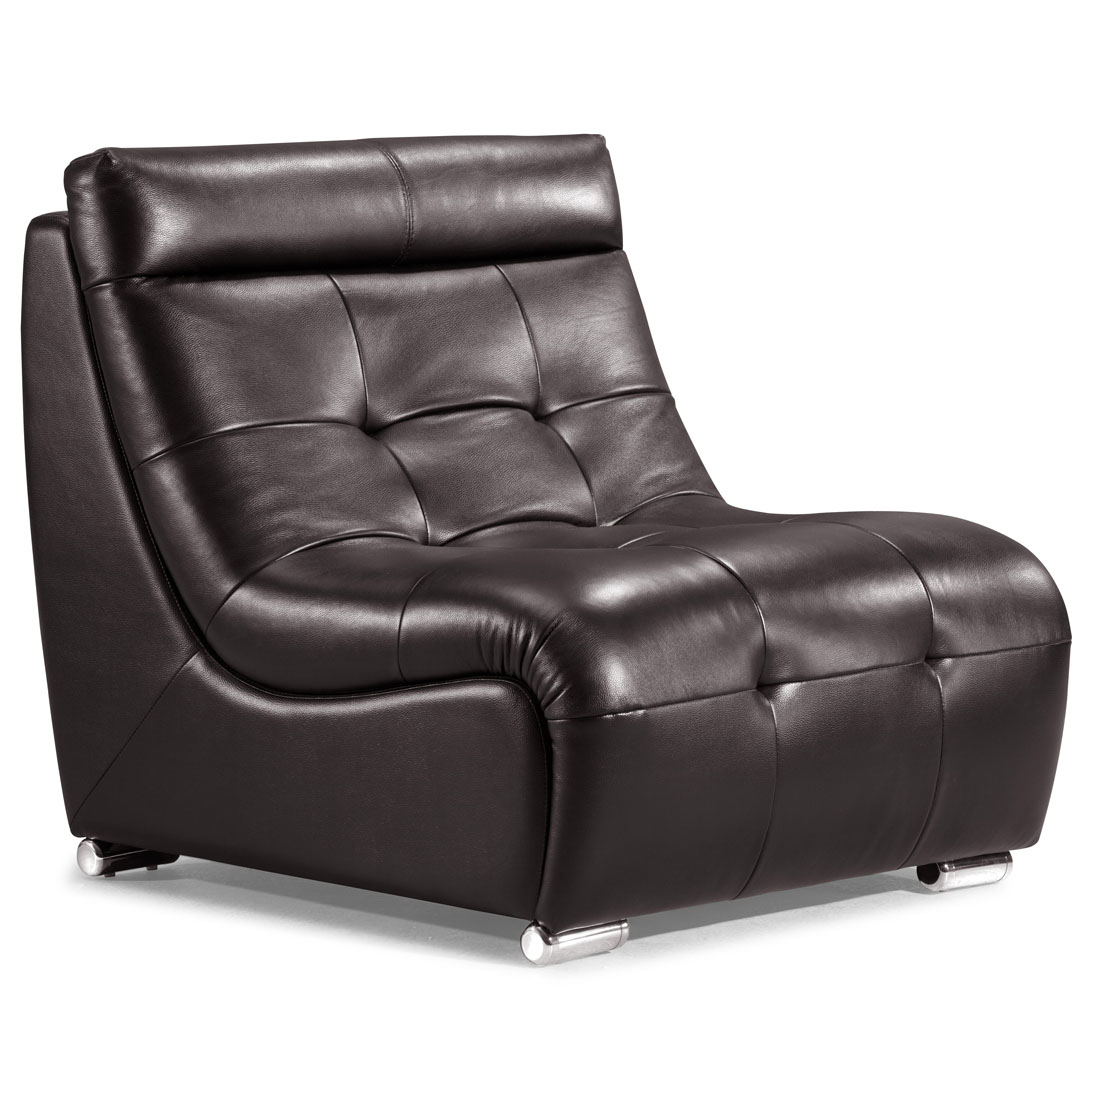 Leather sofa designs single. Furniture Gallery